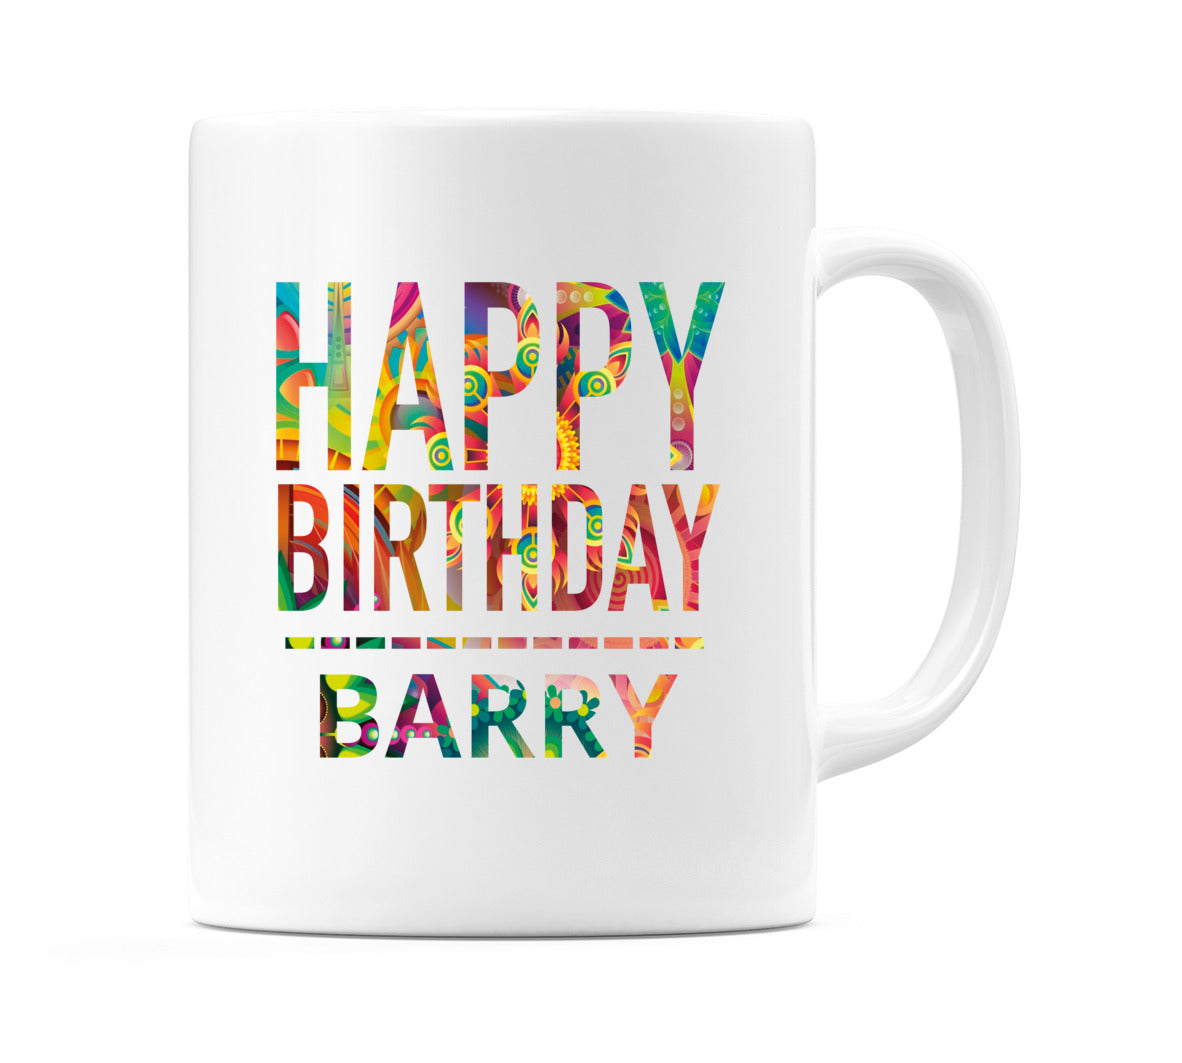 Happy Birthday Barry (Tie Dye Effect) Mug Cup by WeDoMugs